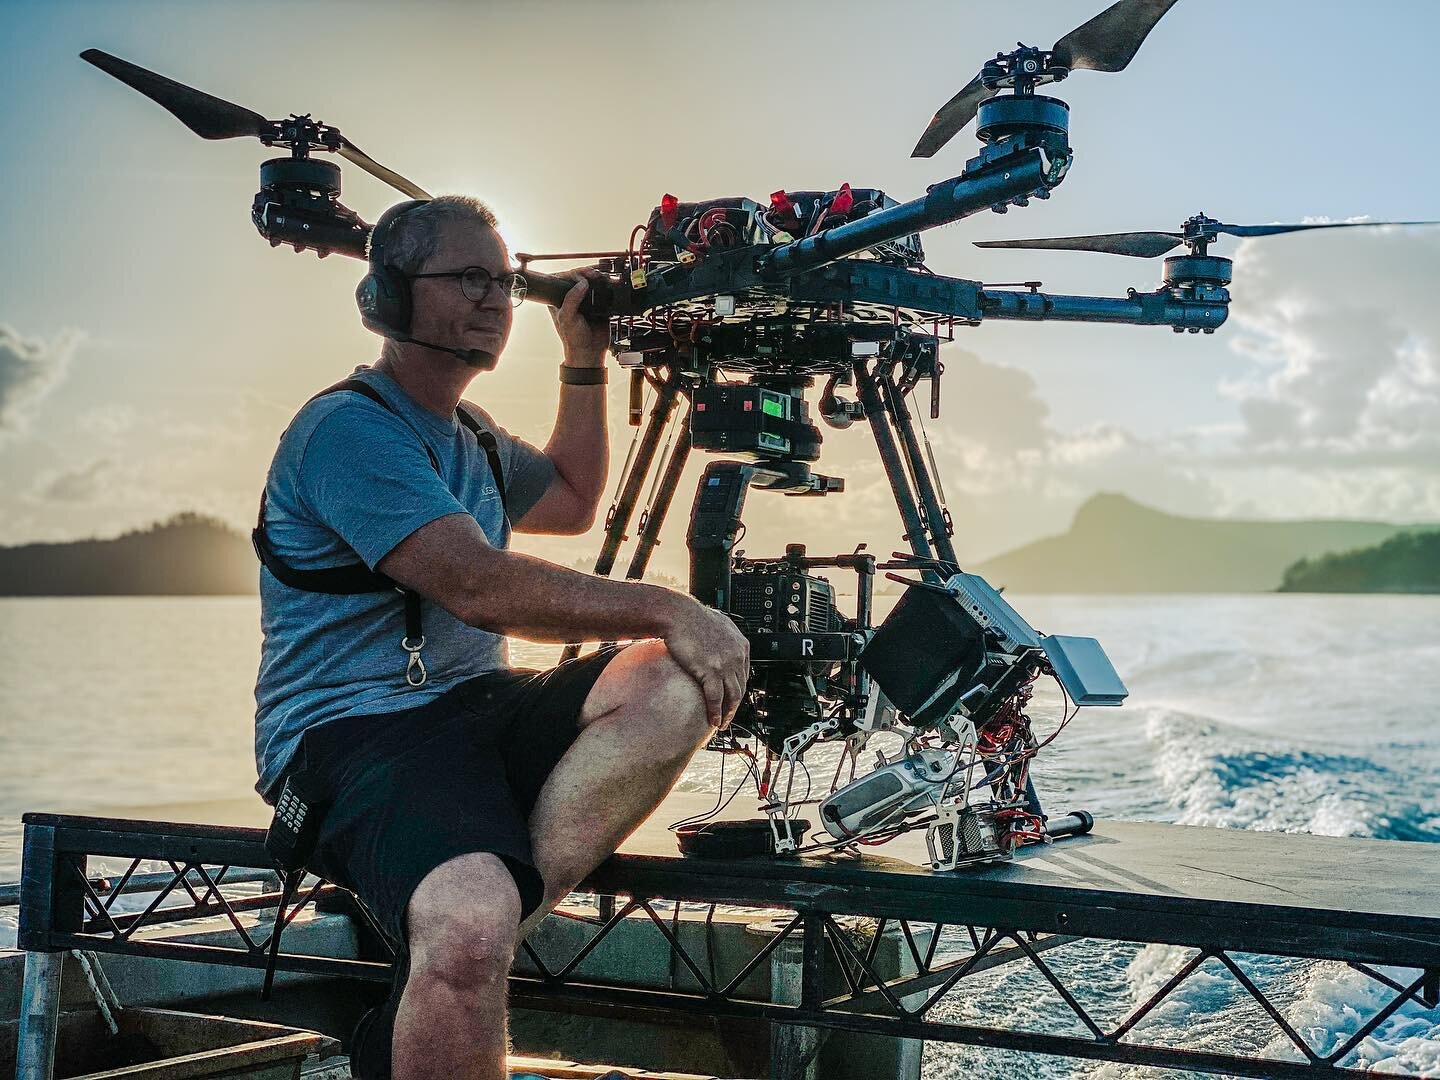 @jeff_gaunt_photography in his element 🏝

@heliguy.tv #drone #cinemadrone #heavylift @freeflysystems #gimbal #R2 #Ronin #dji #djidrone